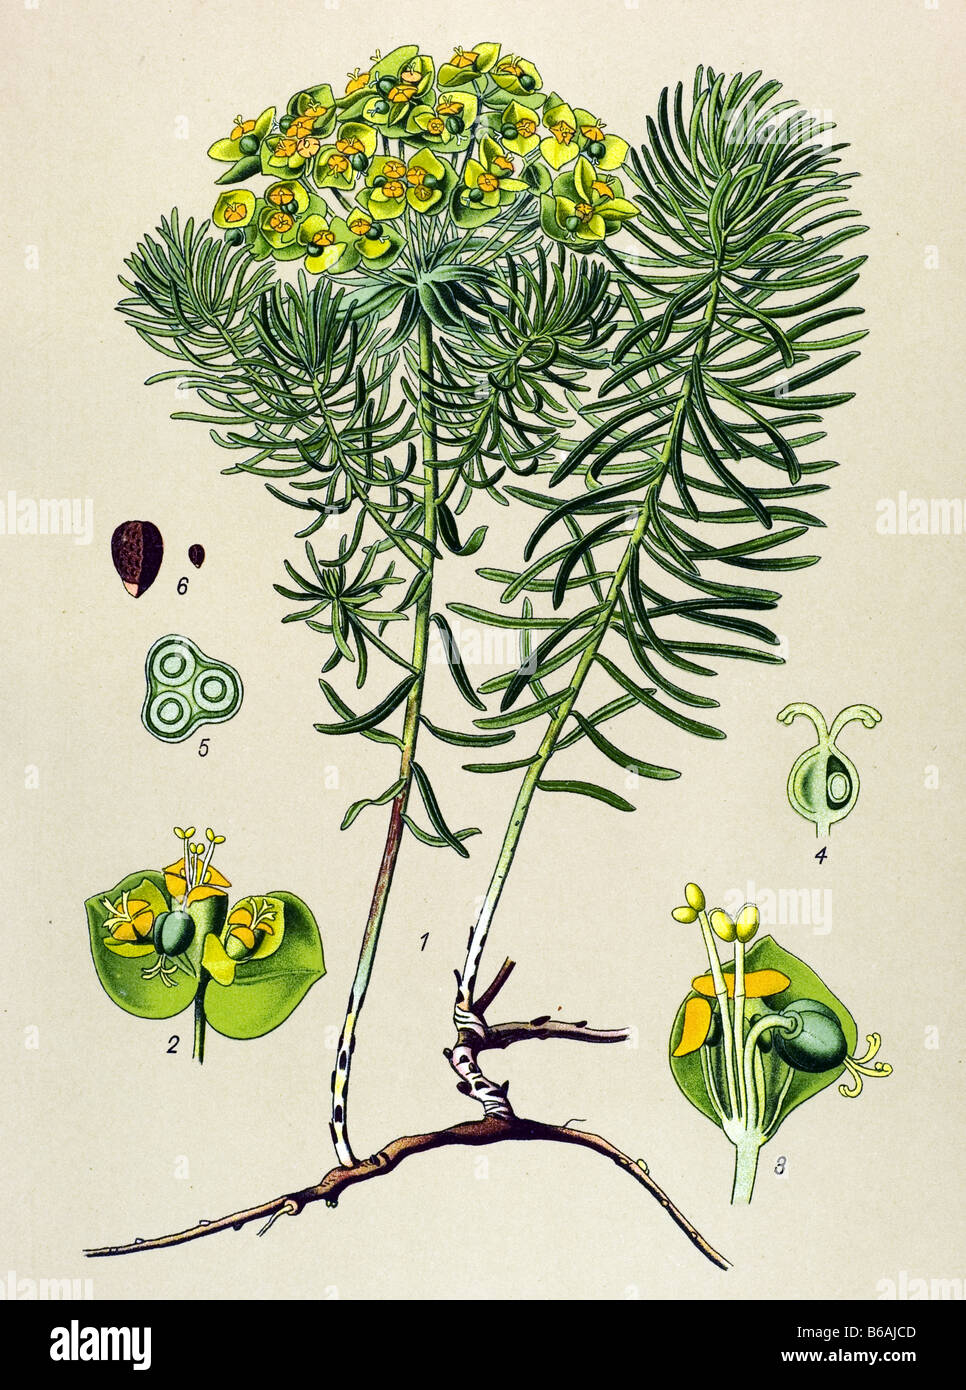 Graveyard weed, Euphorbia cyparissias, poisonous plants illustrations Stock Photo